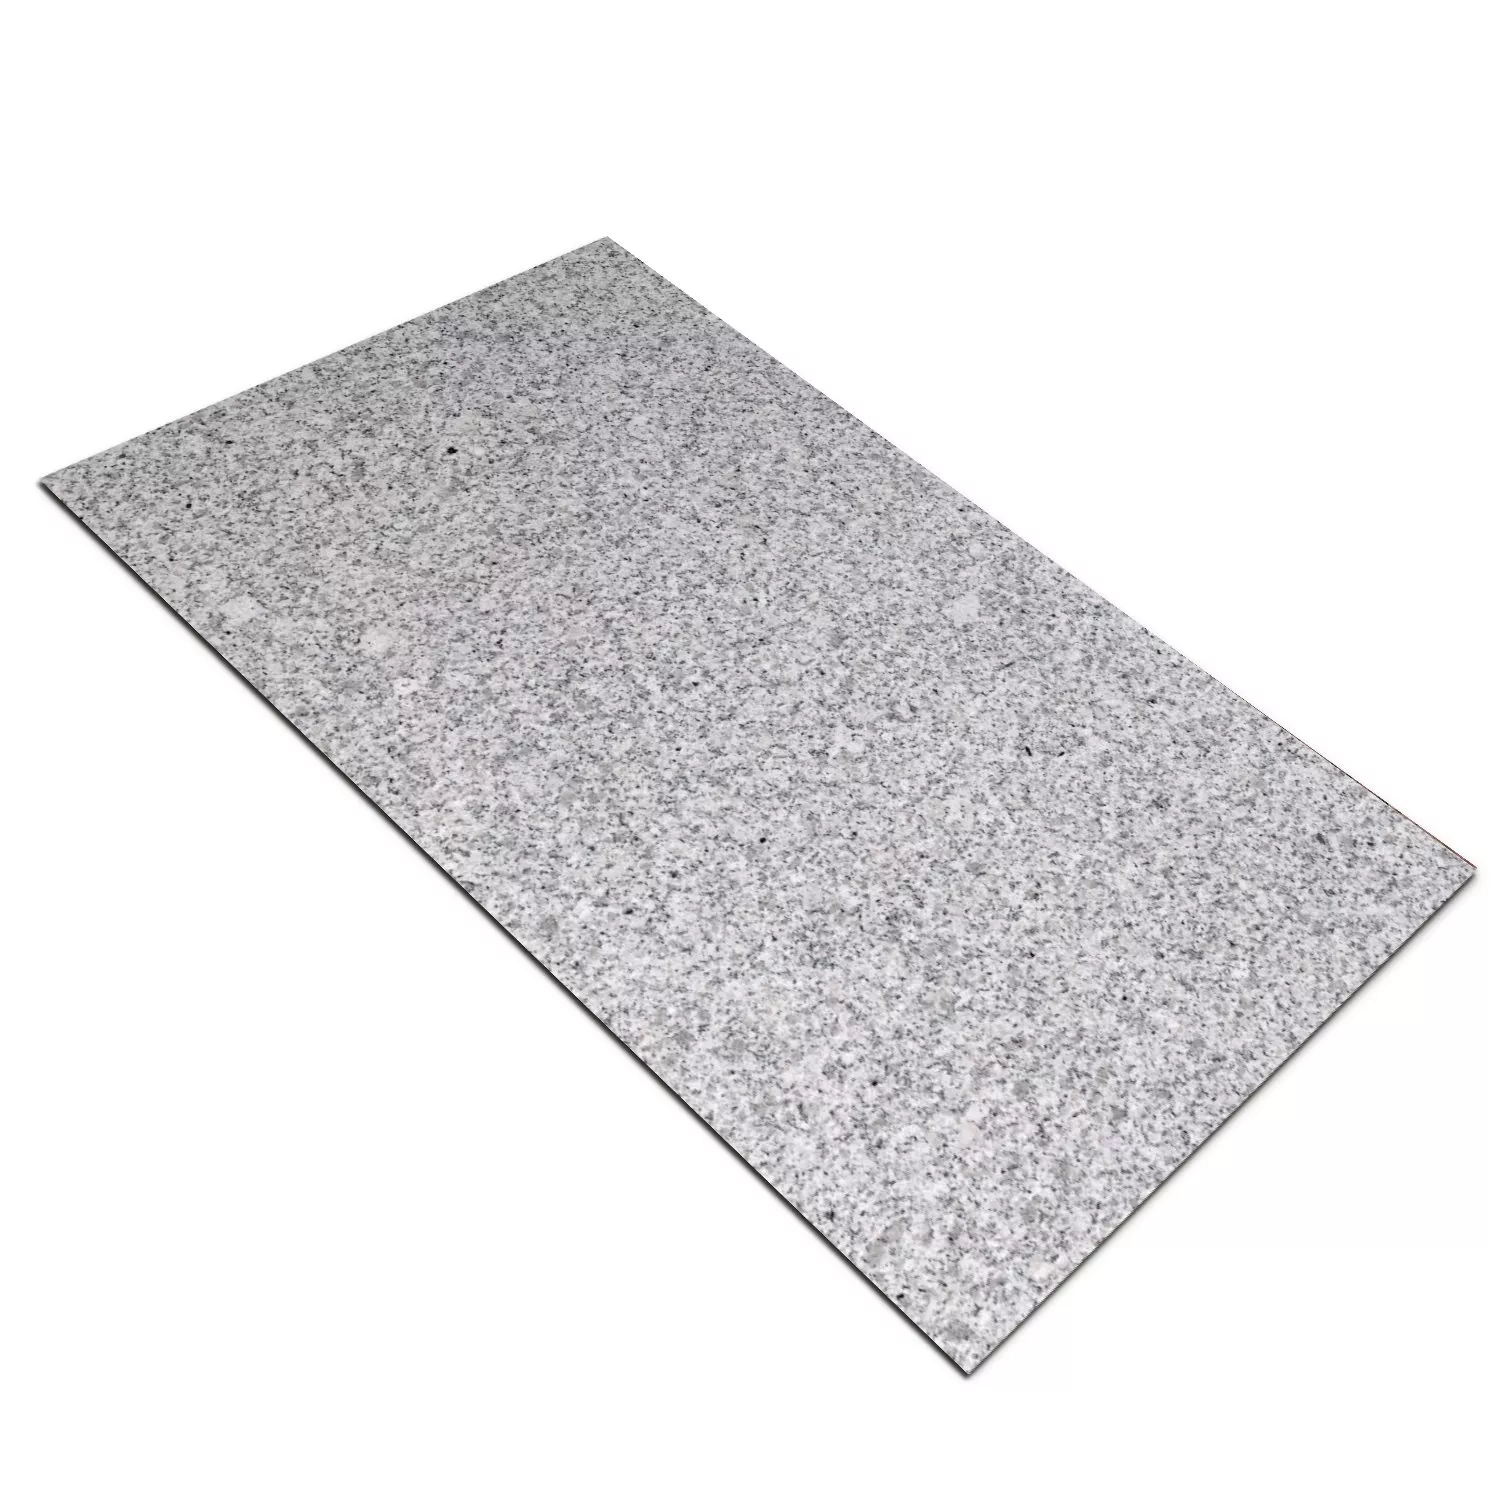 Natural Stone Tiles Granite China Grey Polished 30,5x61cm